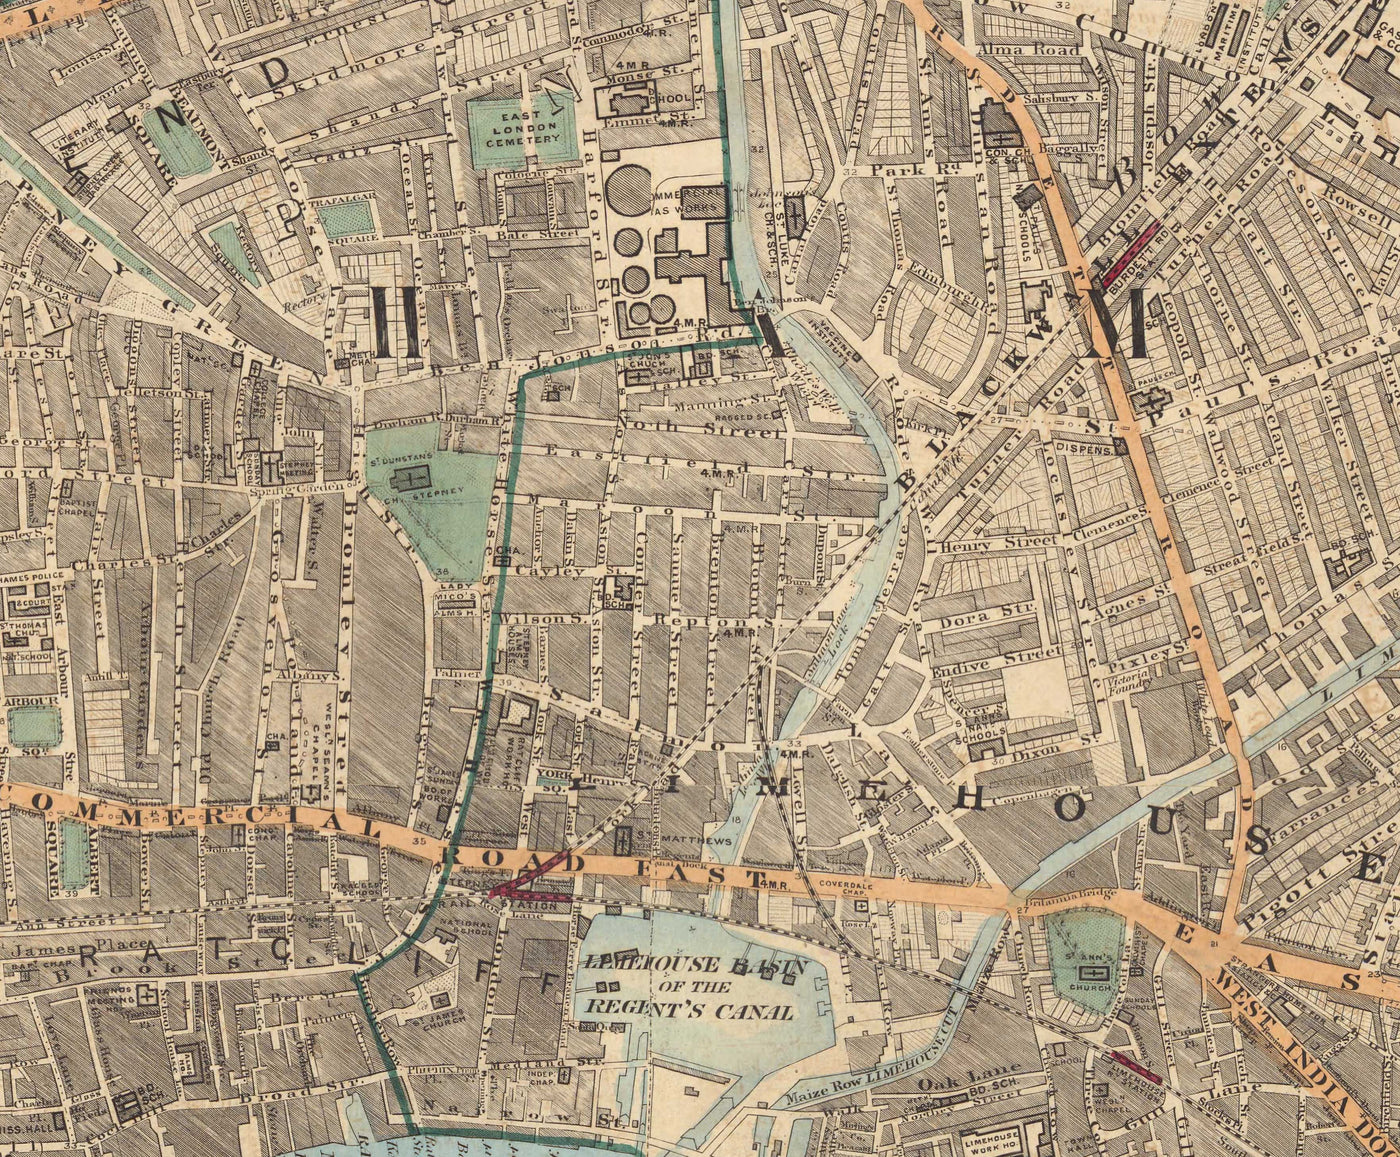 Antiguo mapa en color del este de Londres de 1891 - Isle of Dogs, Tower Hamlets, Limehouse, Poplar, Canary Wharf, Surrey Quays - E1 E3 E14 SE16